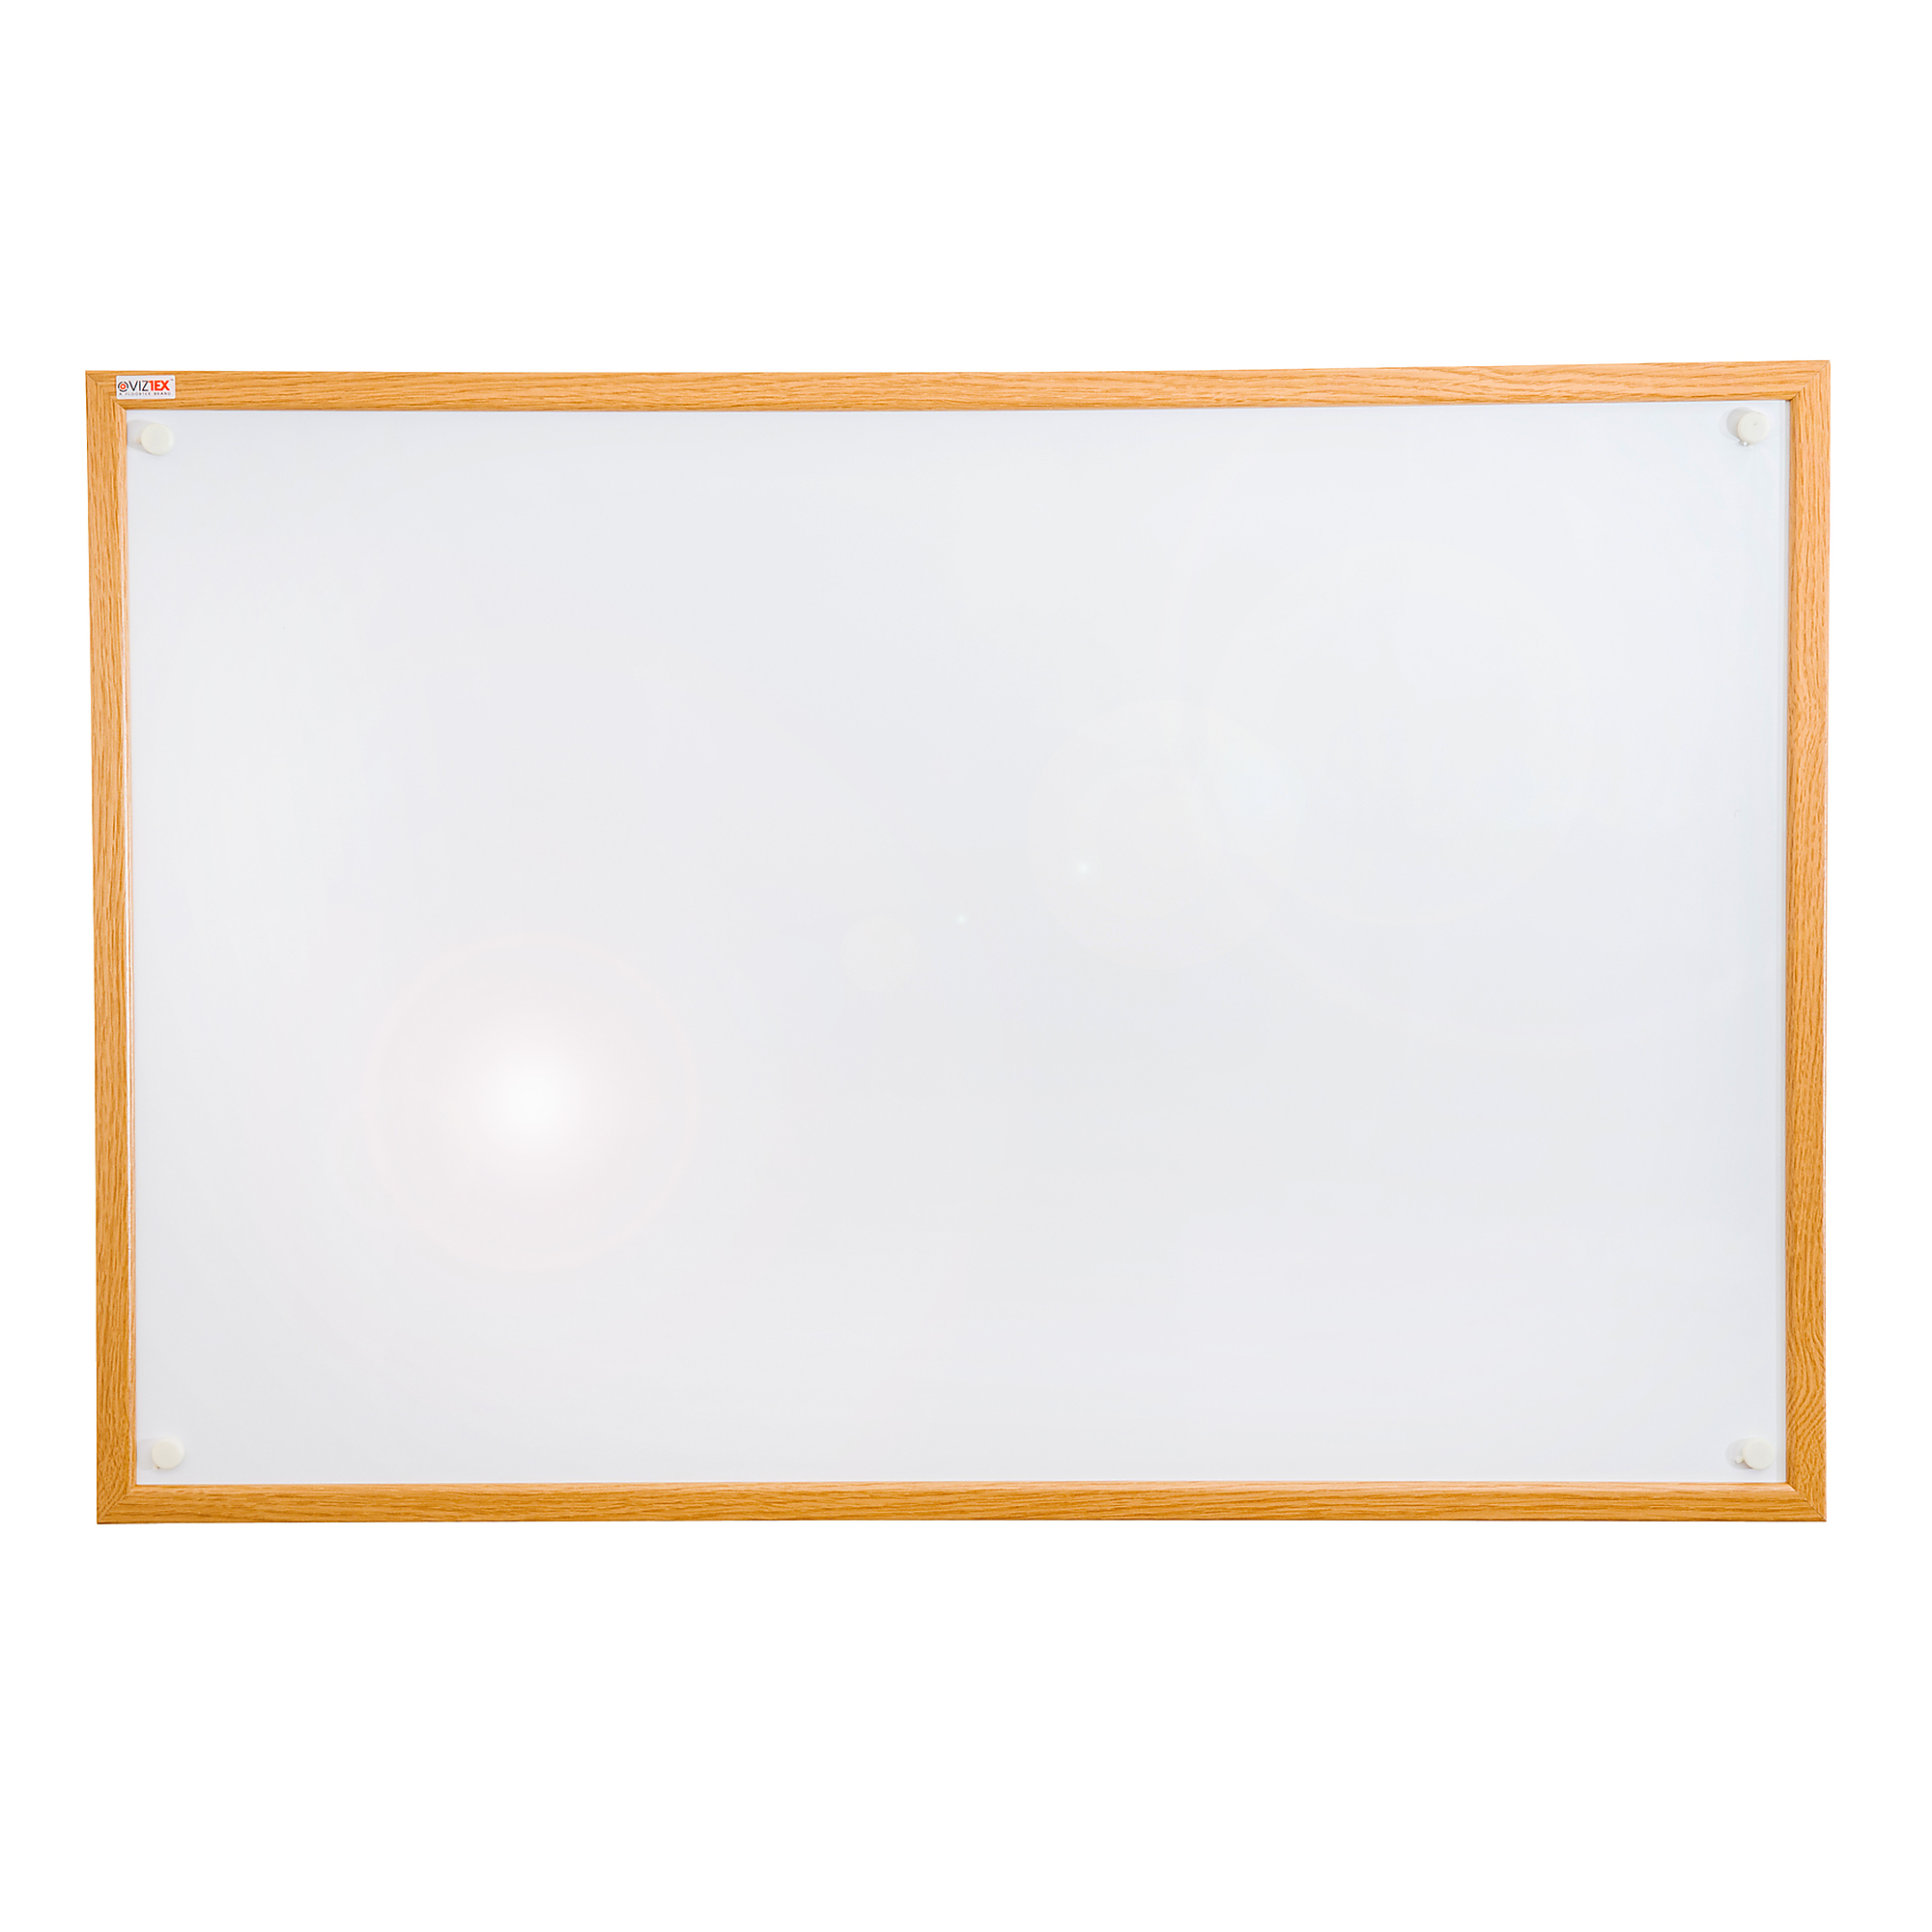 FLOORTEX Viztex , Lacq Steel Dry Erase Board;Oak Effect Frame 36x48 Color Finish White, Model FCVLM4836W